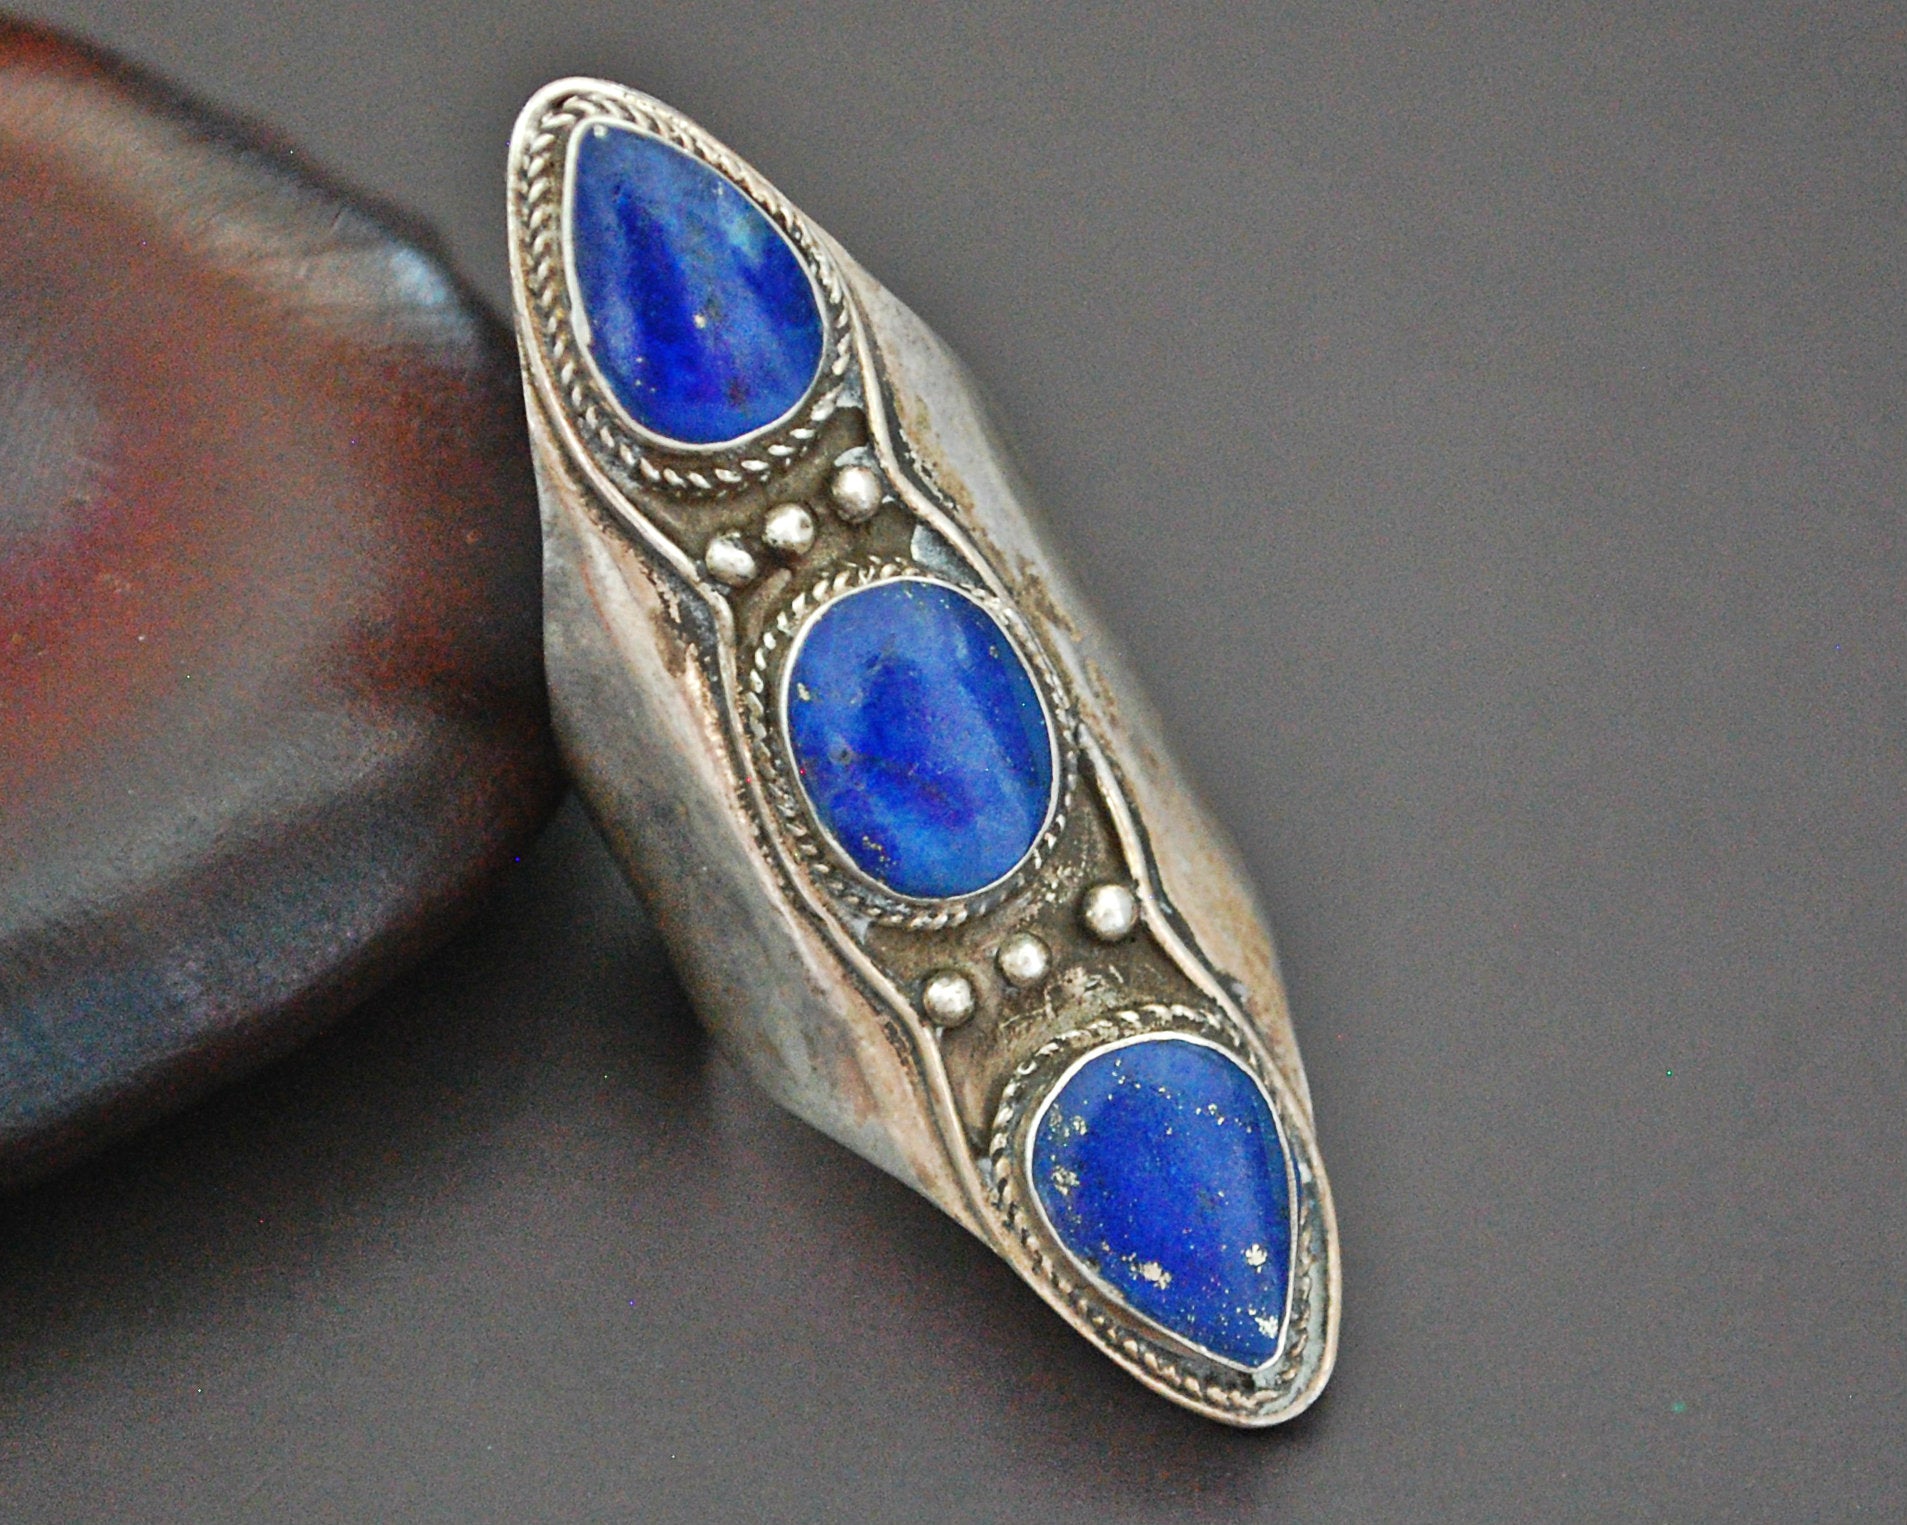 Vintage Nepali Lapis Lazuli Ring - Size 8.25